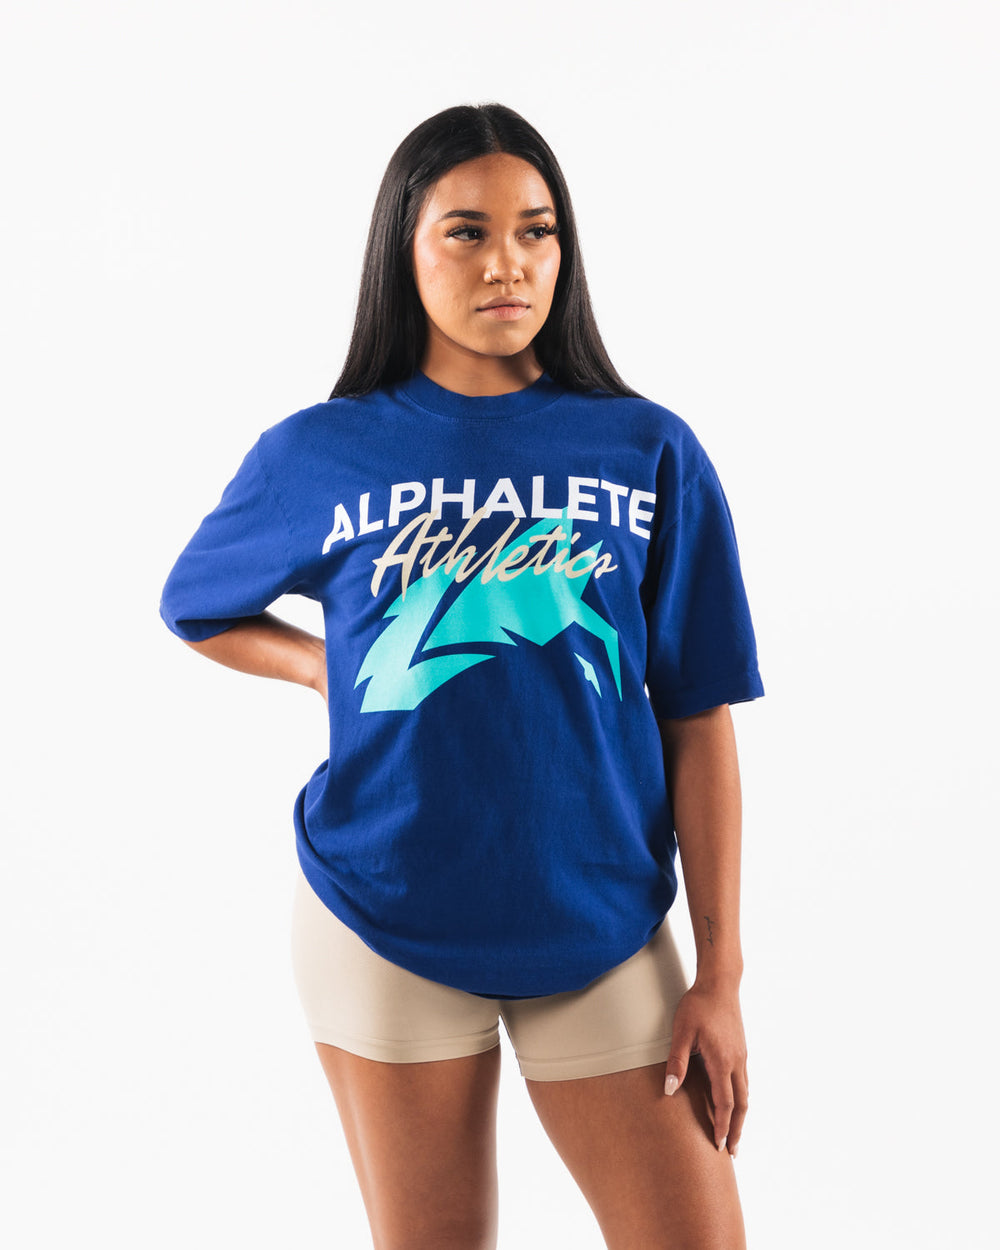 Alphalete Size xs amplify leggings in the color “true indigo” - $47